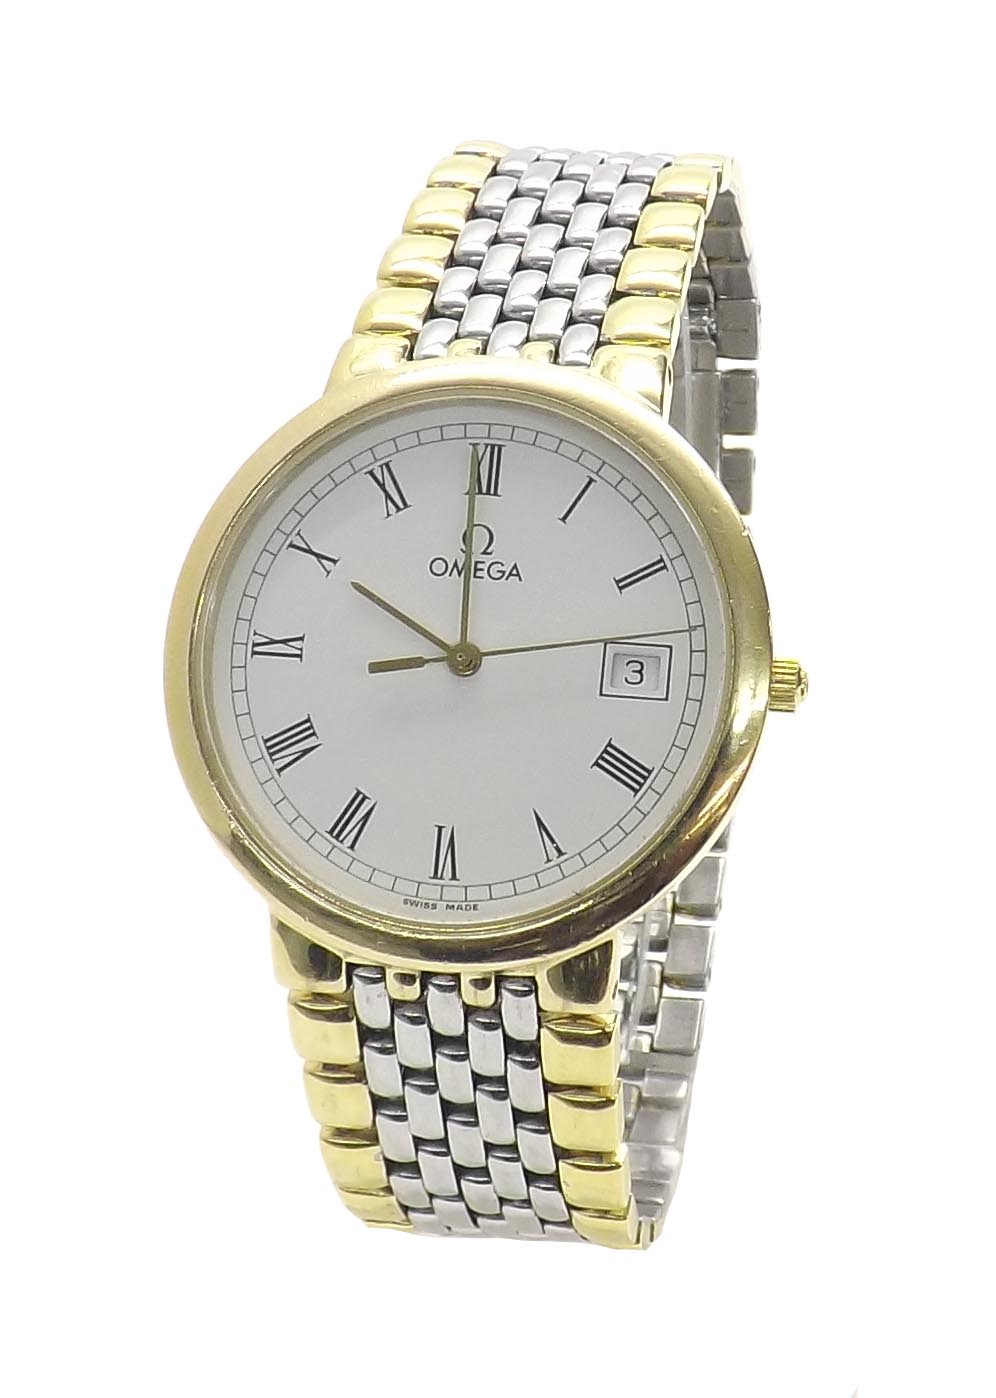 (UVLX5U) Omega bicolour quartz gentleman's dress bracelet watch, circa 1991/2, the white dial with